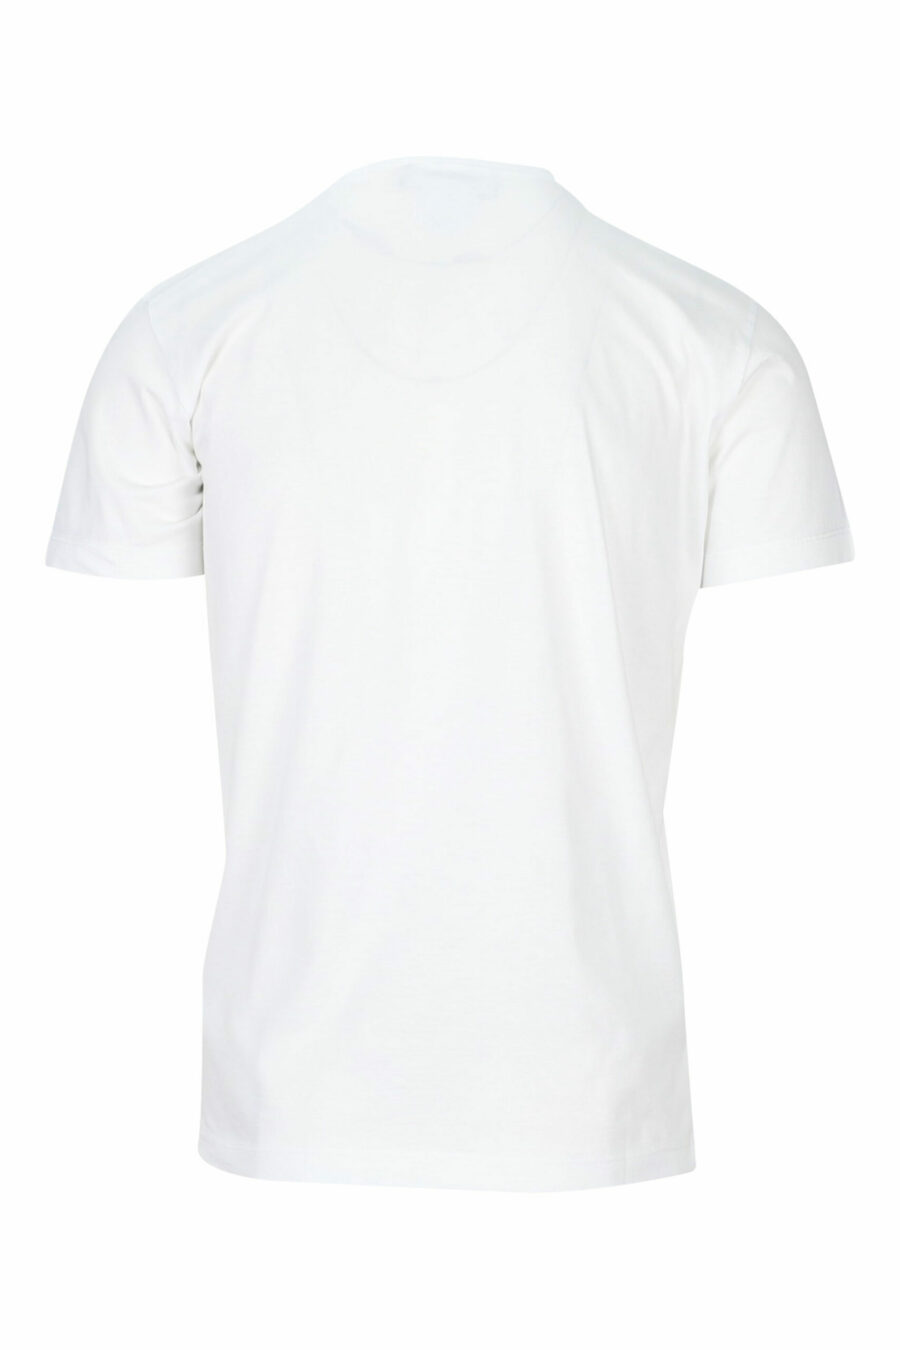 T-shirt blanc avec maxilogo blanc et bleu avec bouclier - 8054148159665 1 scaled